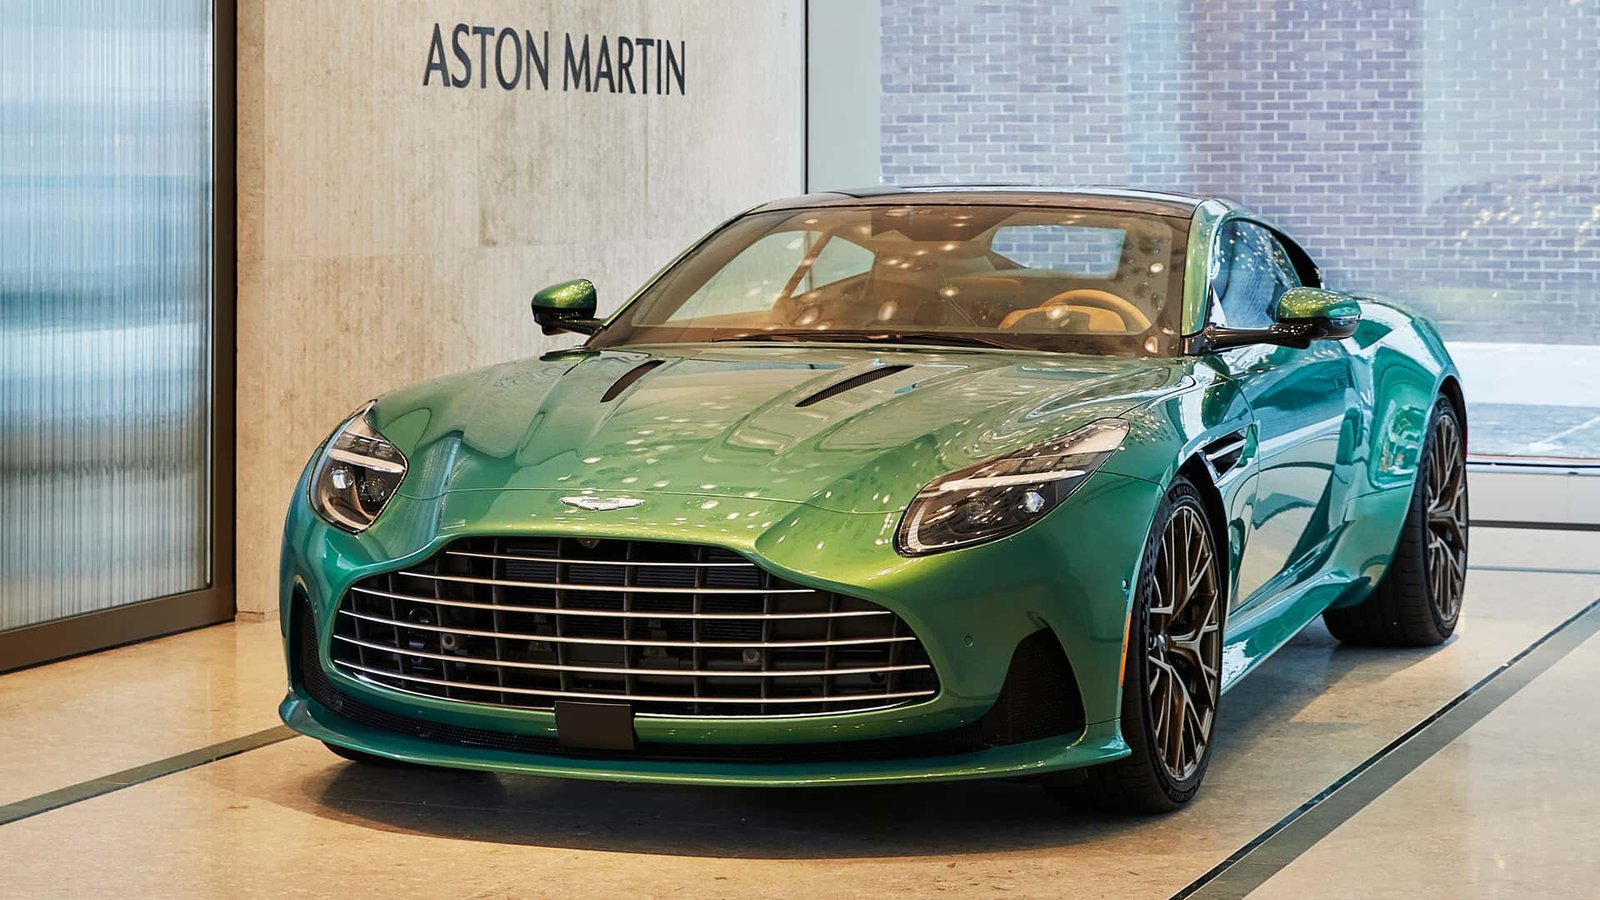 Aston Martin Unveils the Q New York, Their Entry into the Ultra-Luxury Flagship Market